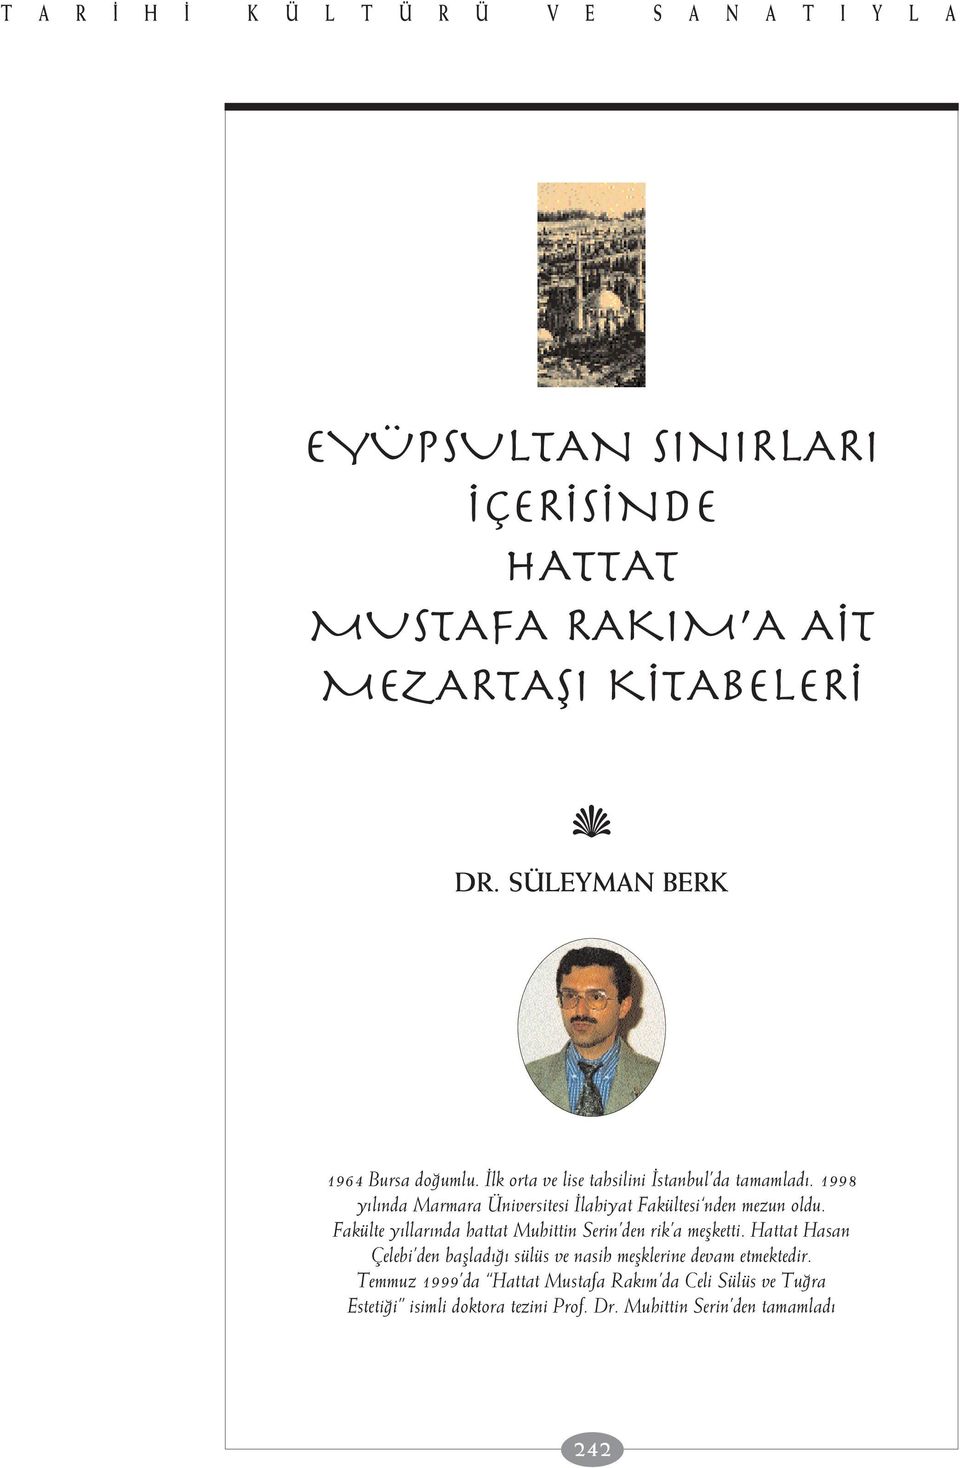 1998 y l nda Marmara Üniversitesi lahiyat Fakültesi nden mezun oldu. Fakülte y llar nda hattat Muhittin Serin den rik a meflketti.